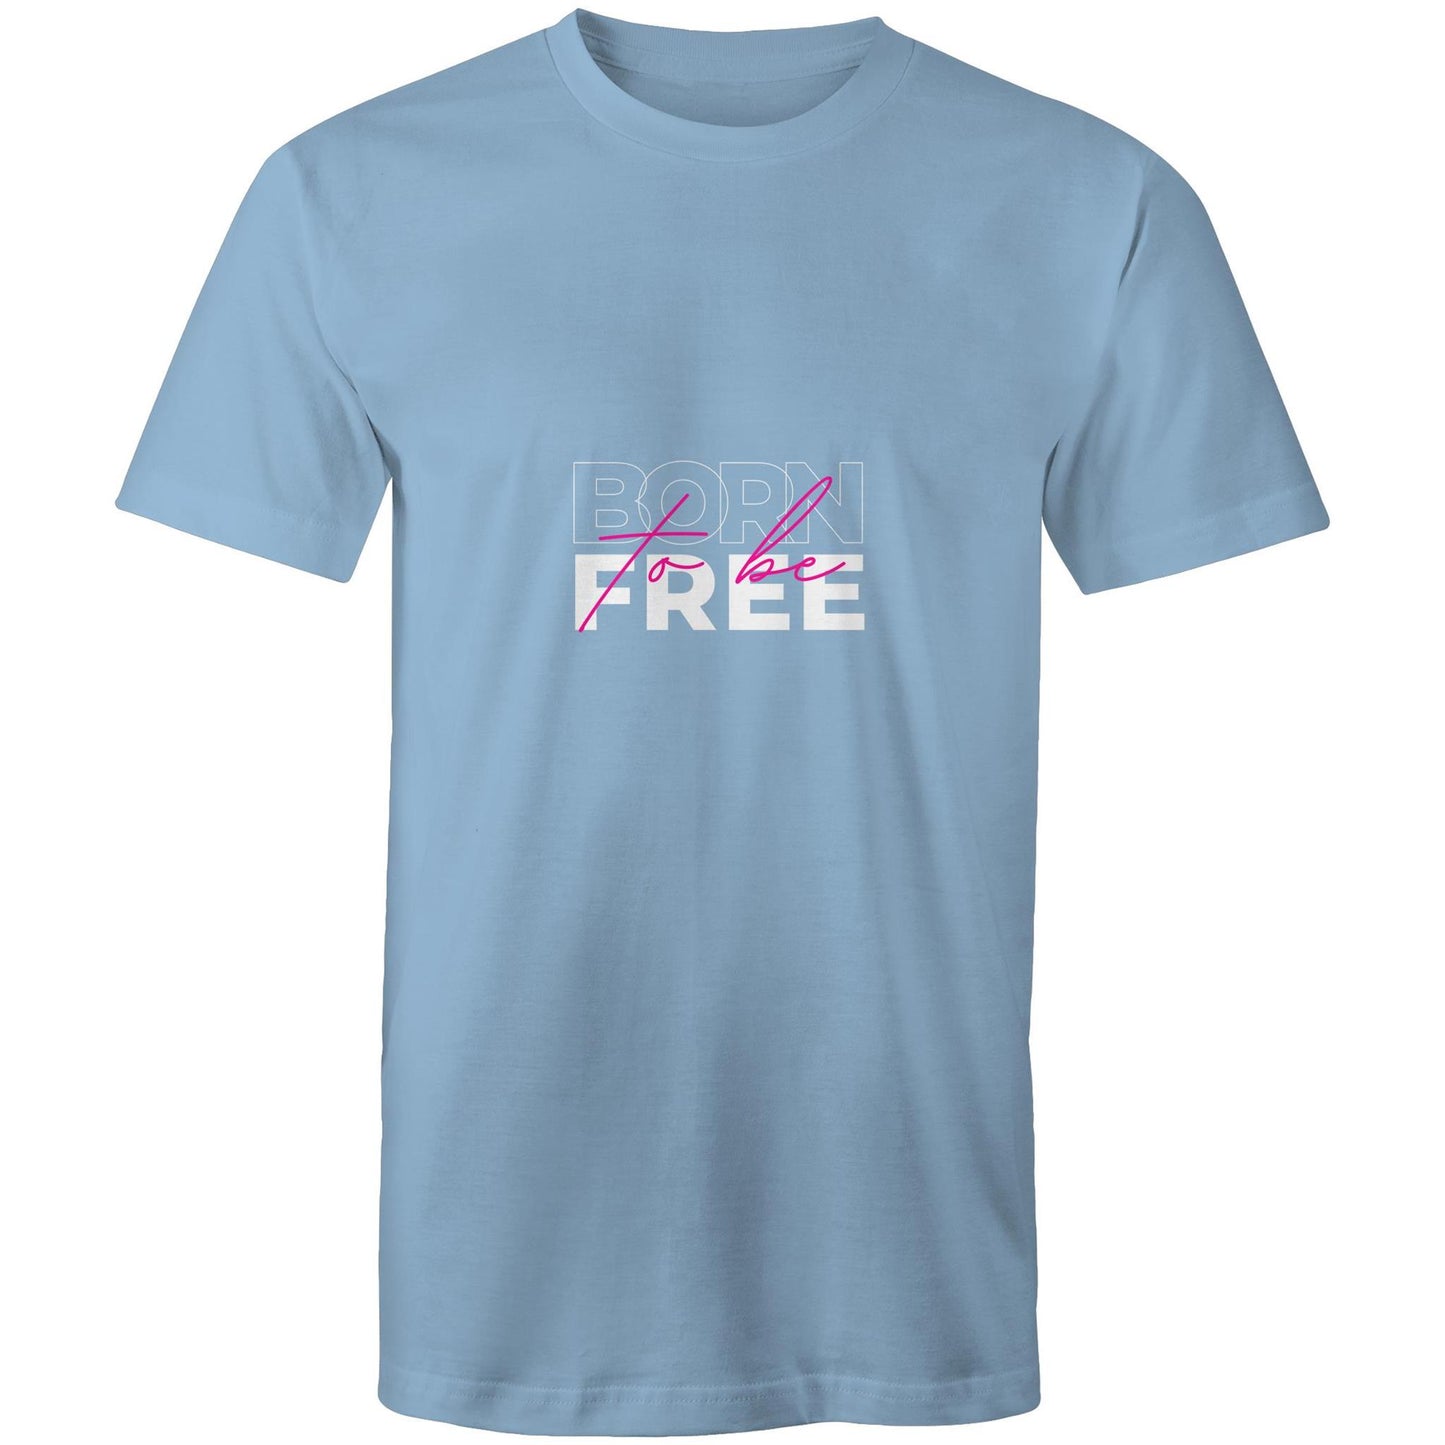 Born to be Free - Mens T-Shirt